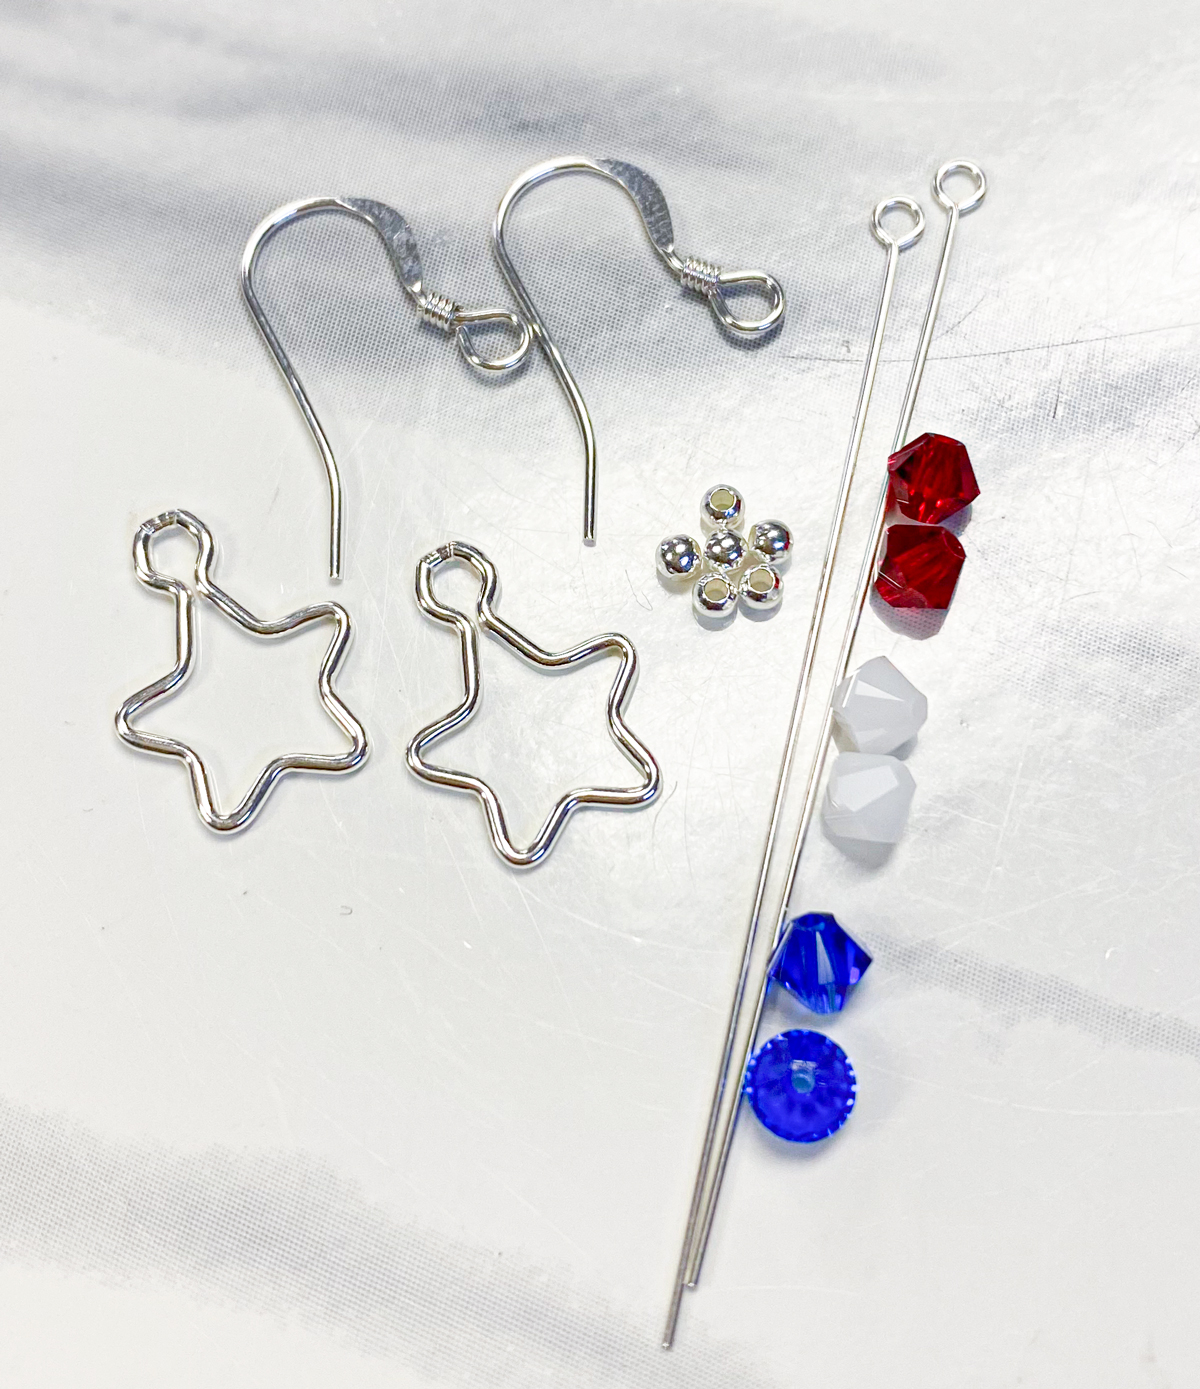 Gems of the Earth Earrings - Jewelry Making Kit – Too Cute Beads